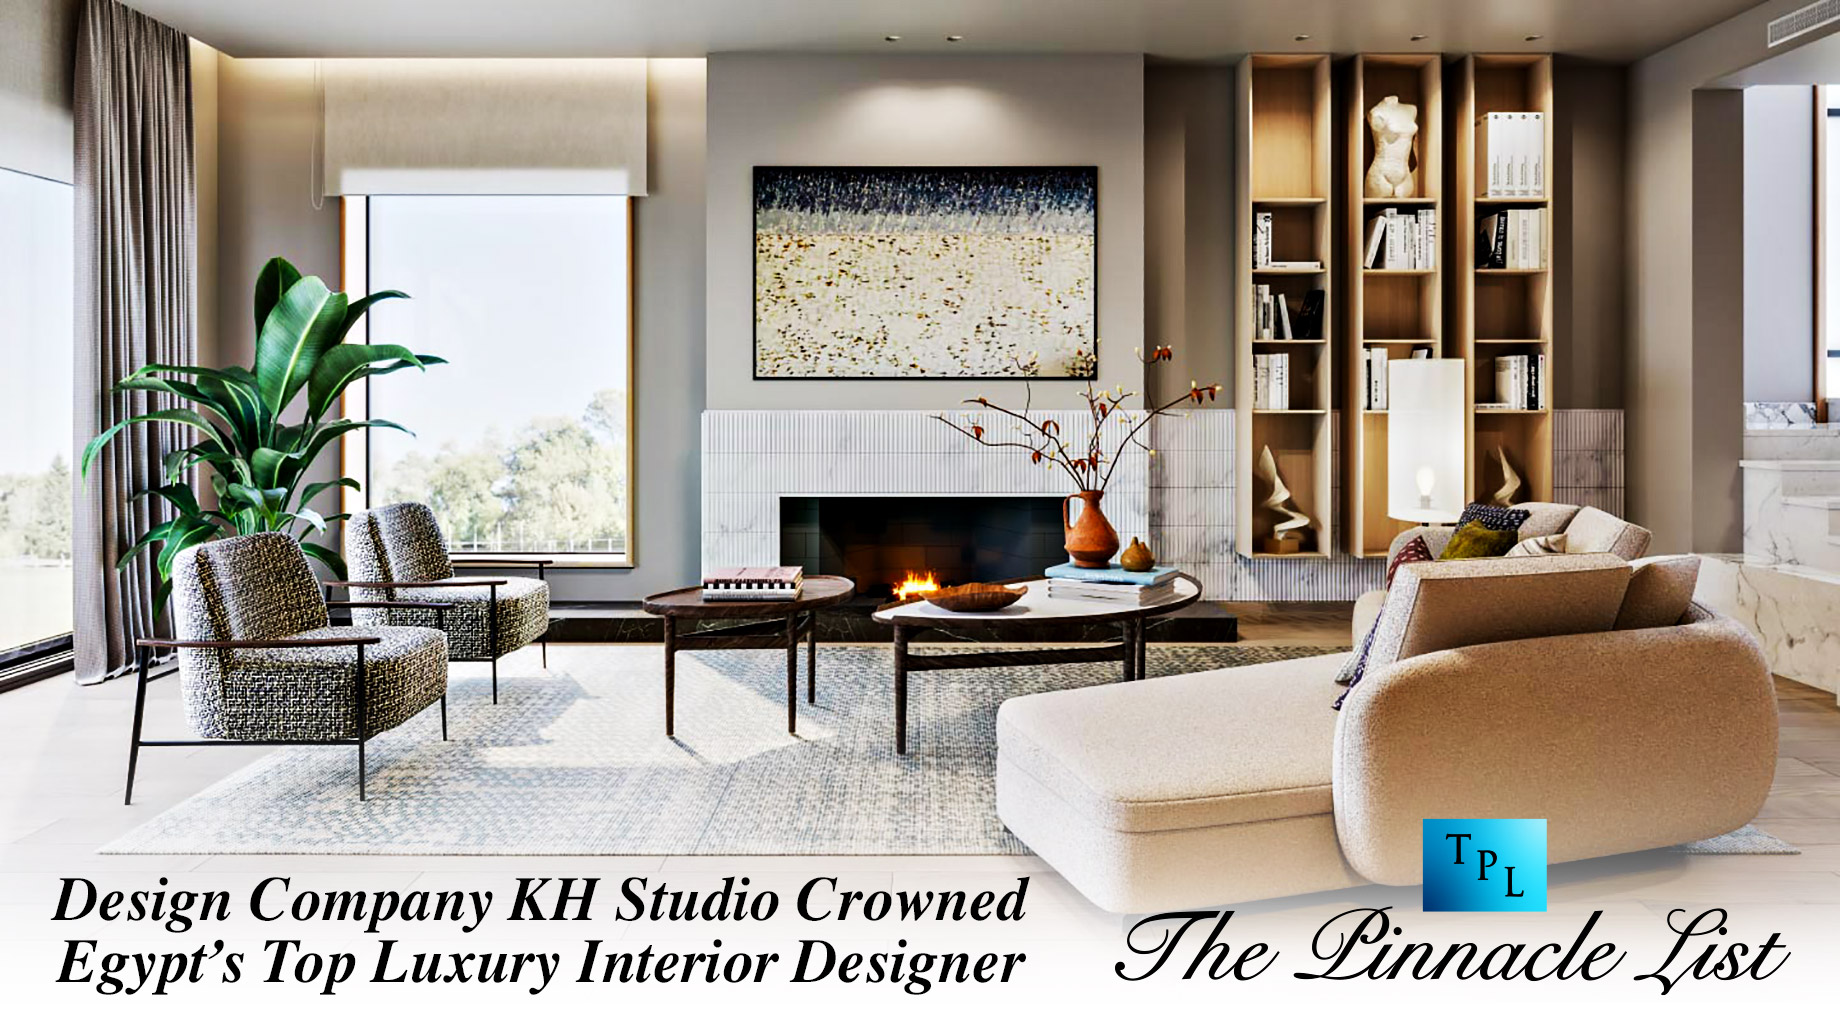 Experienced Design Company KH Studio Crowned Egypt’s Top Luxury Interior Designer